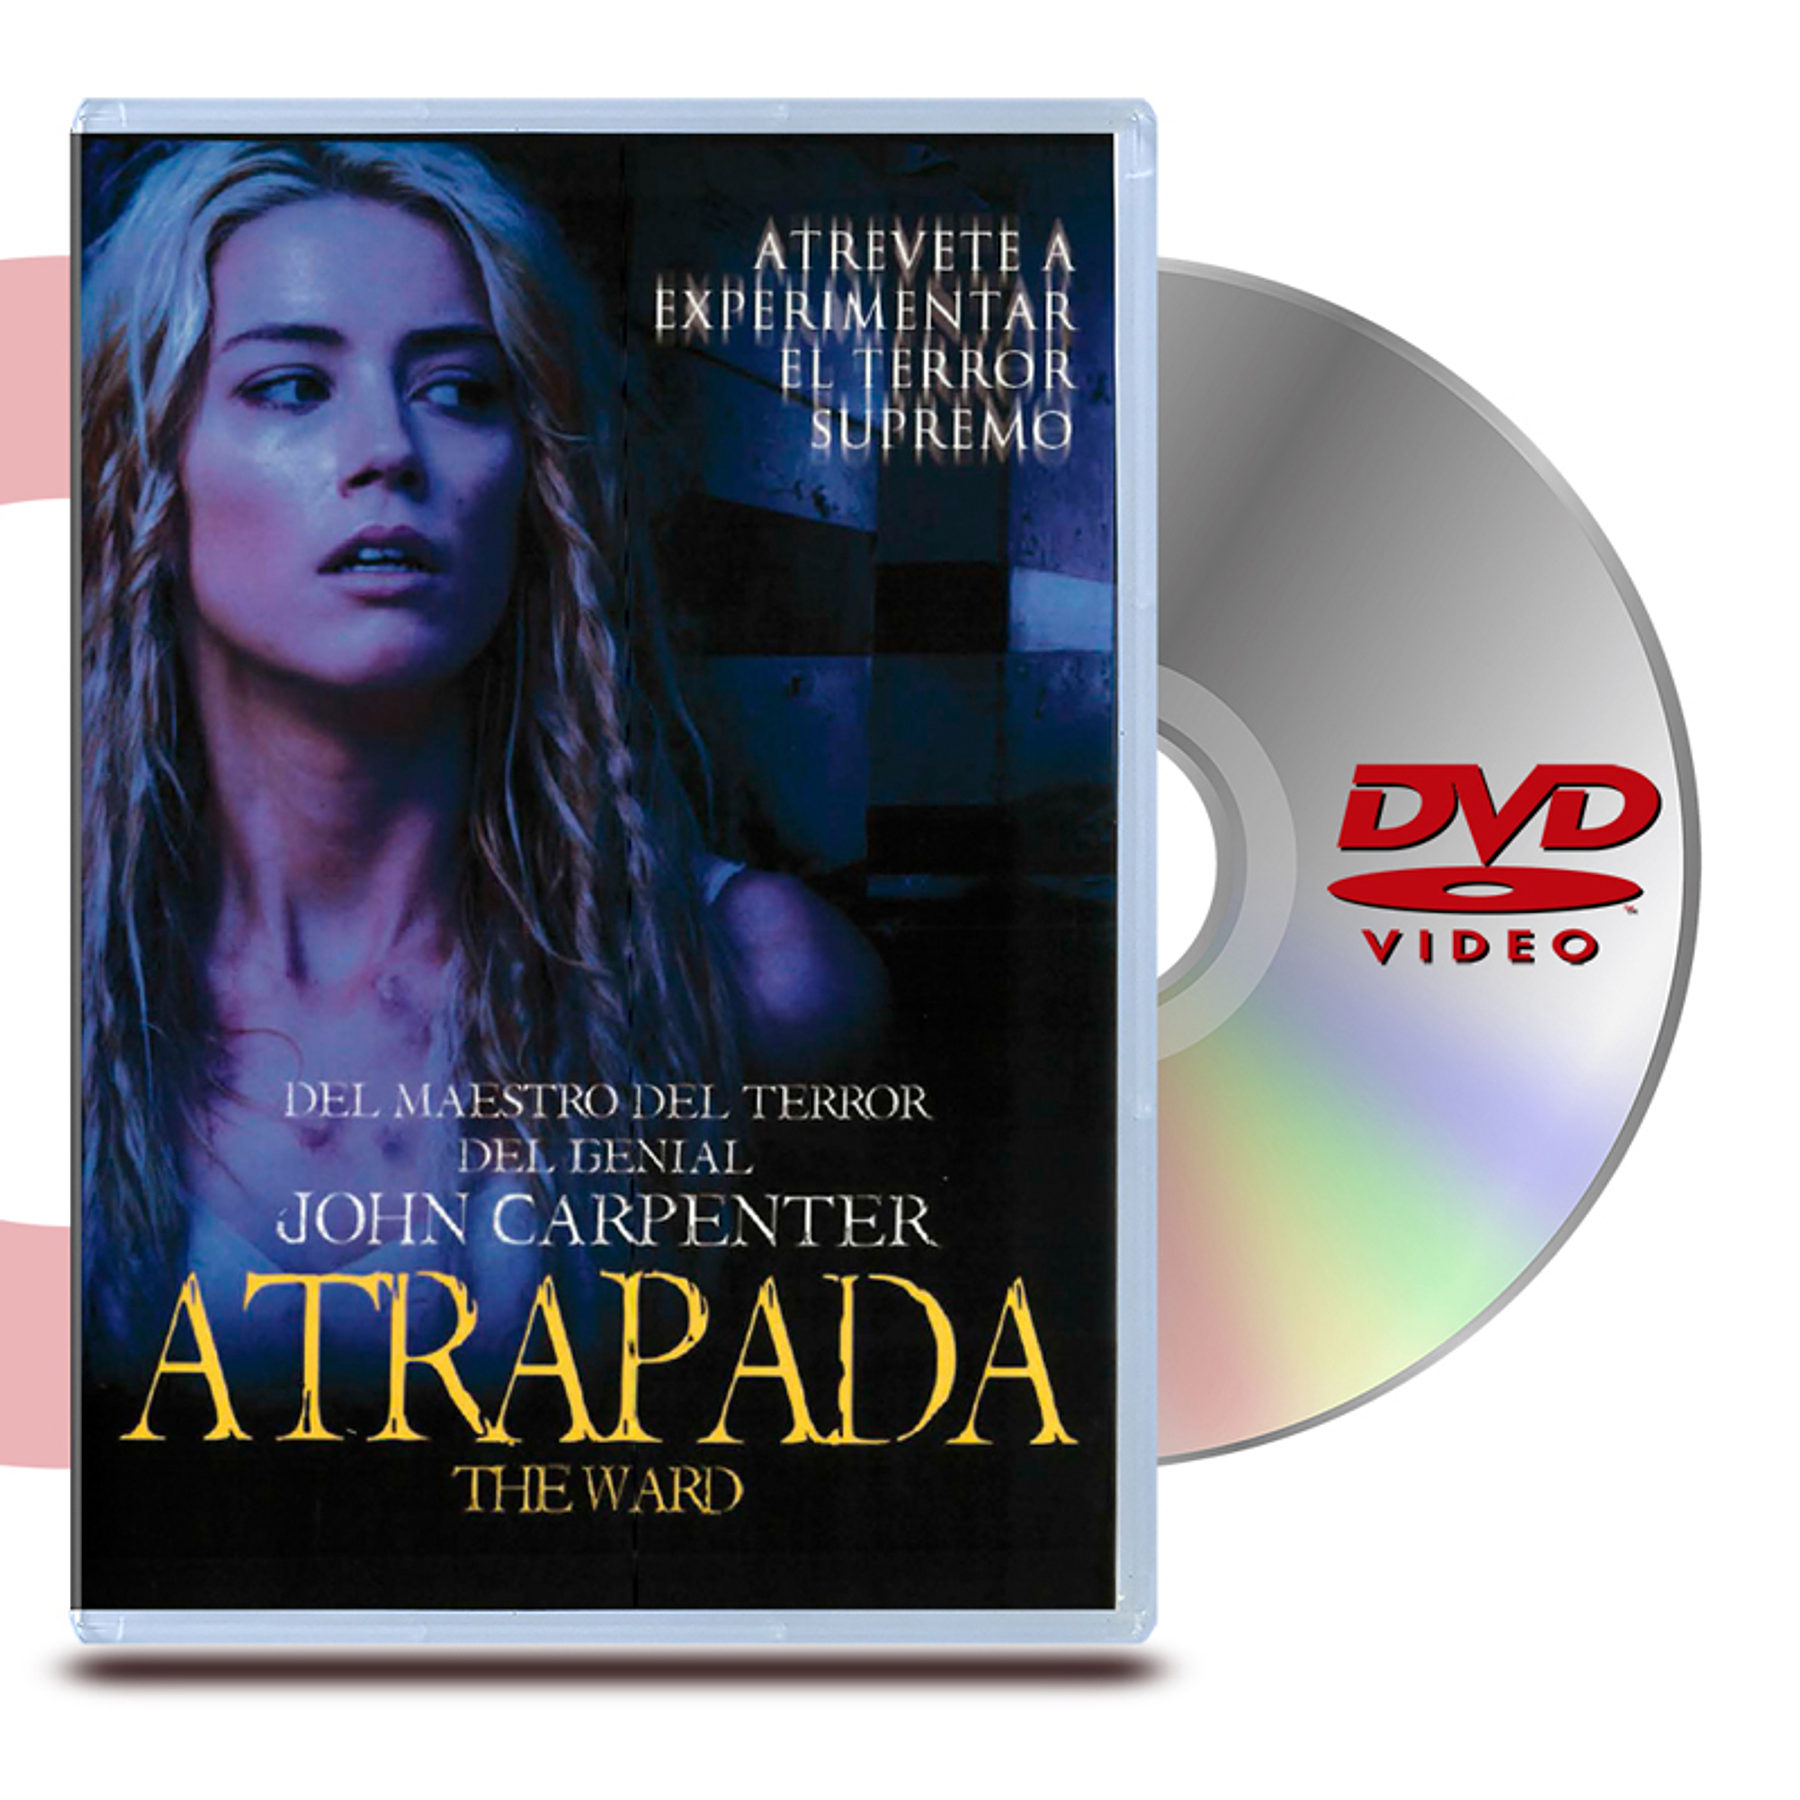 DVD ATRAPADA